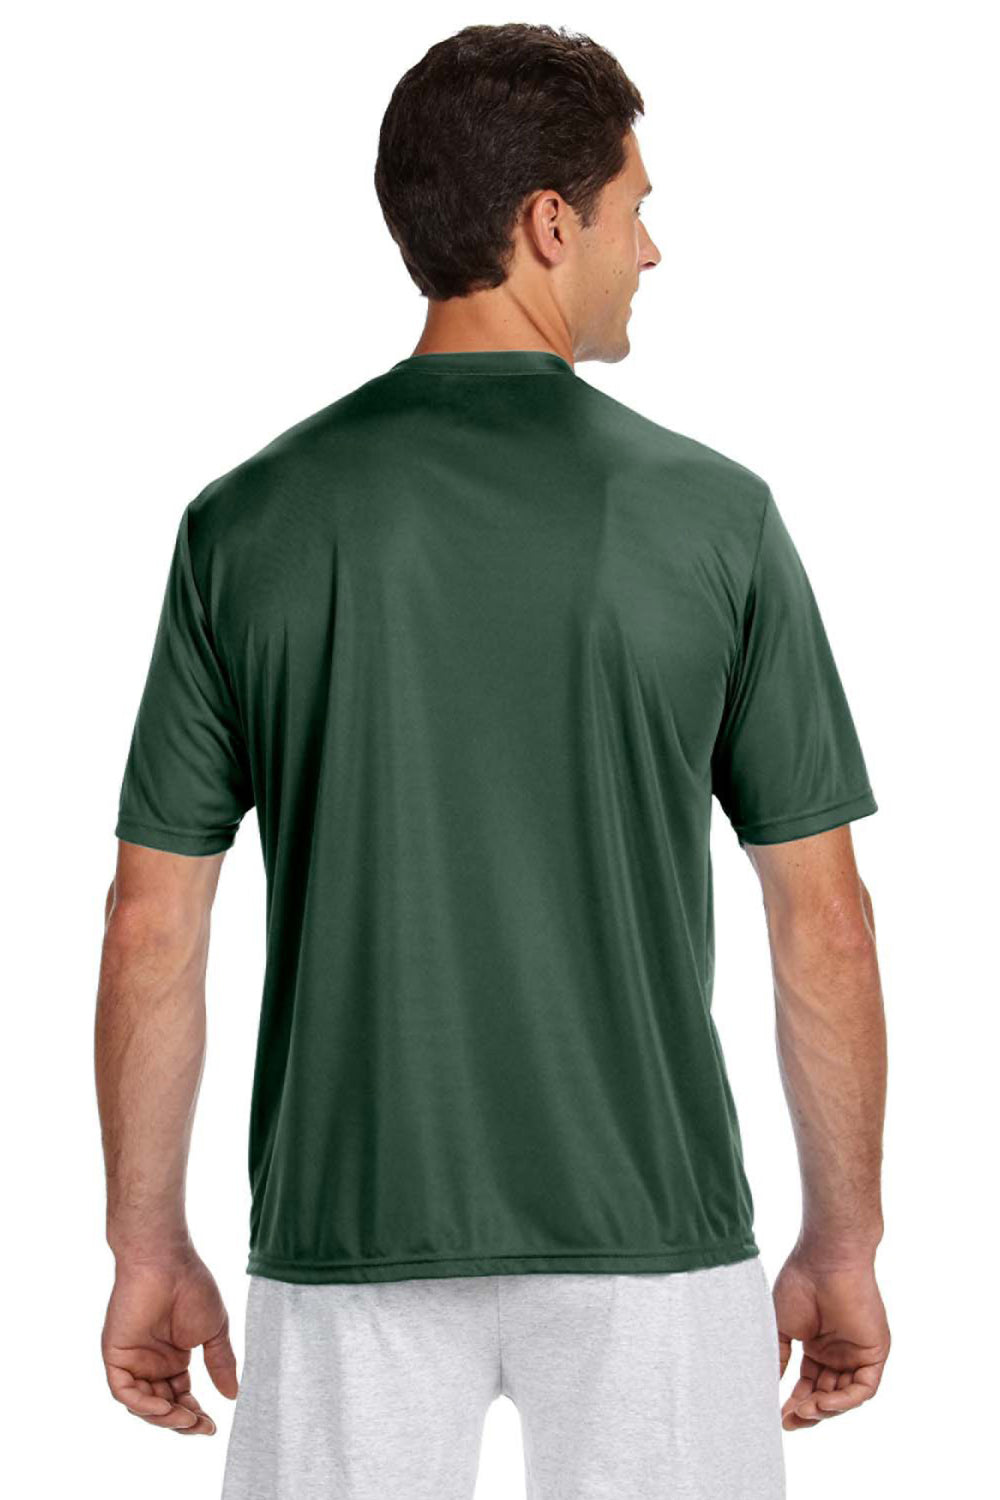 A4 N3142 Mens Performance Moisture Wicking Short Sleeve Crewneck T-Shirt Forest Green Model Back